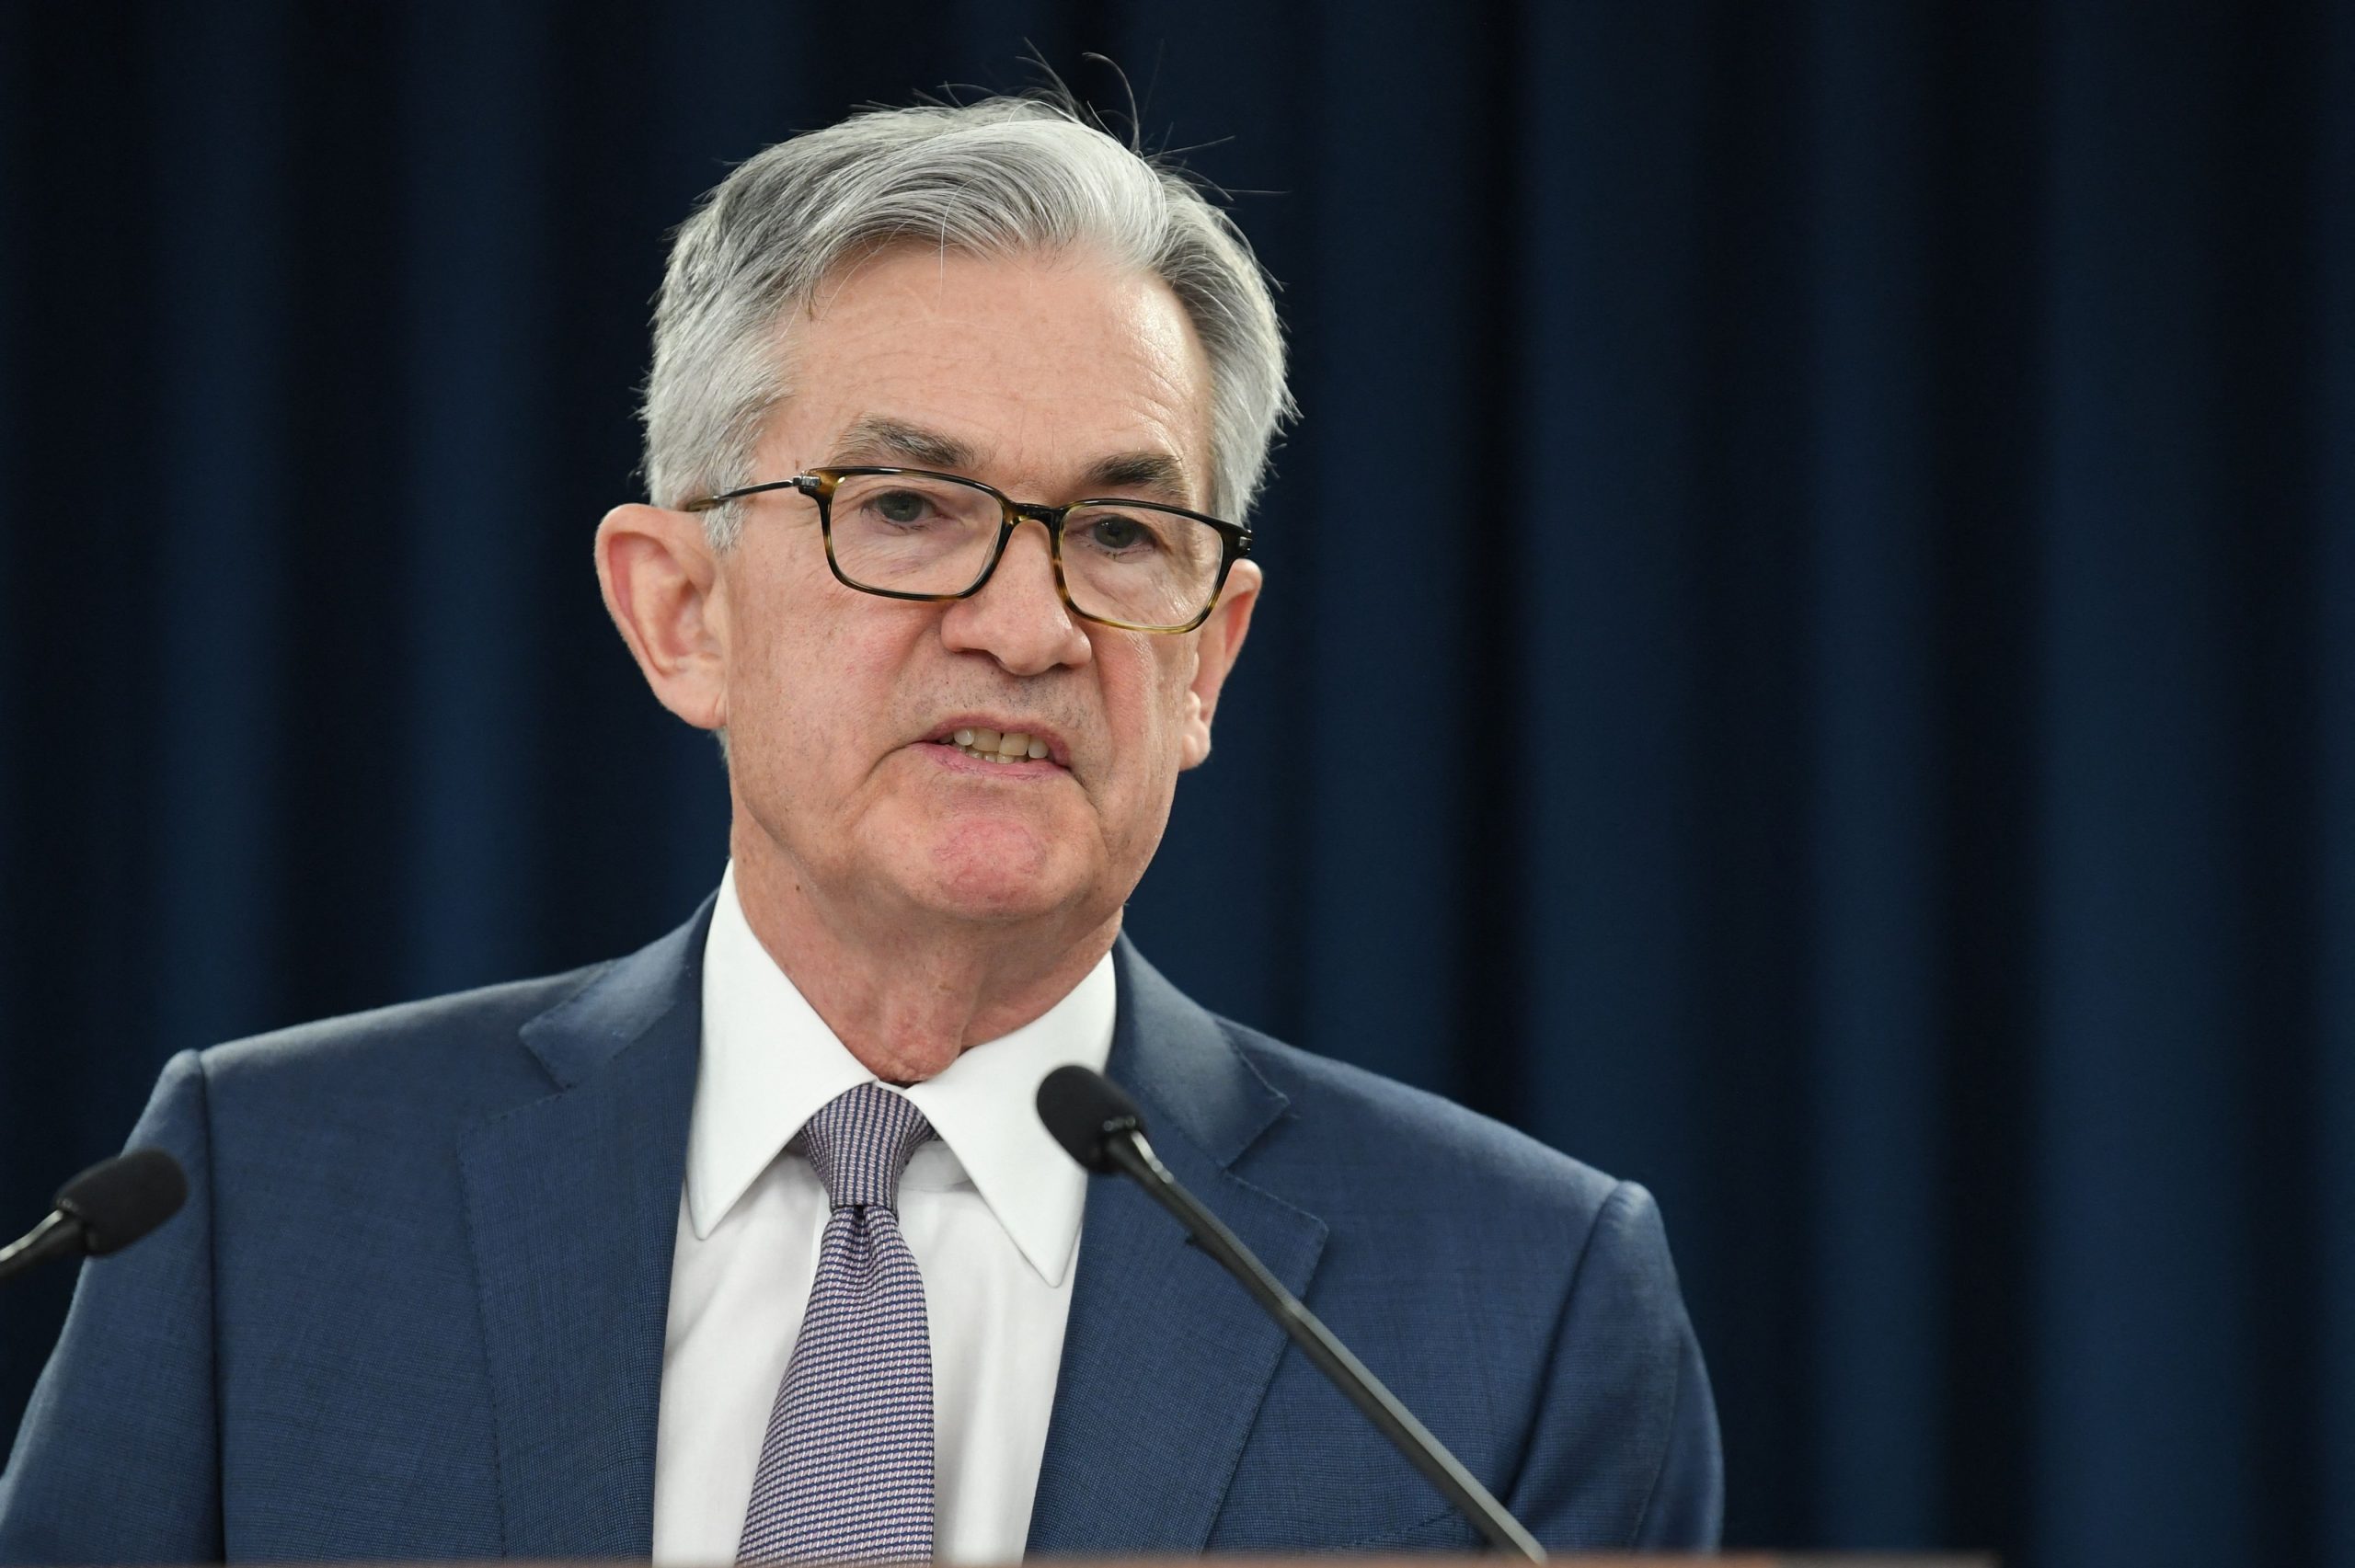 Jackson Hole Symposium 2022: Economists react to Fed chair Powell’s speech